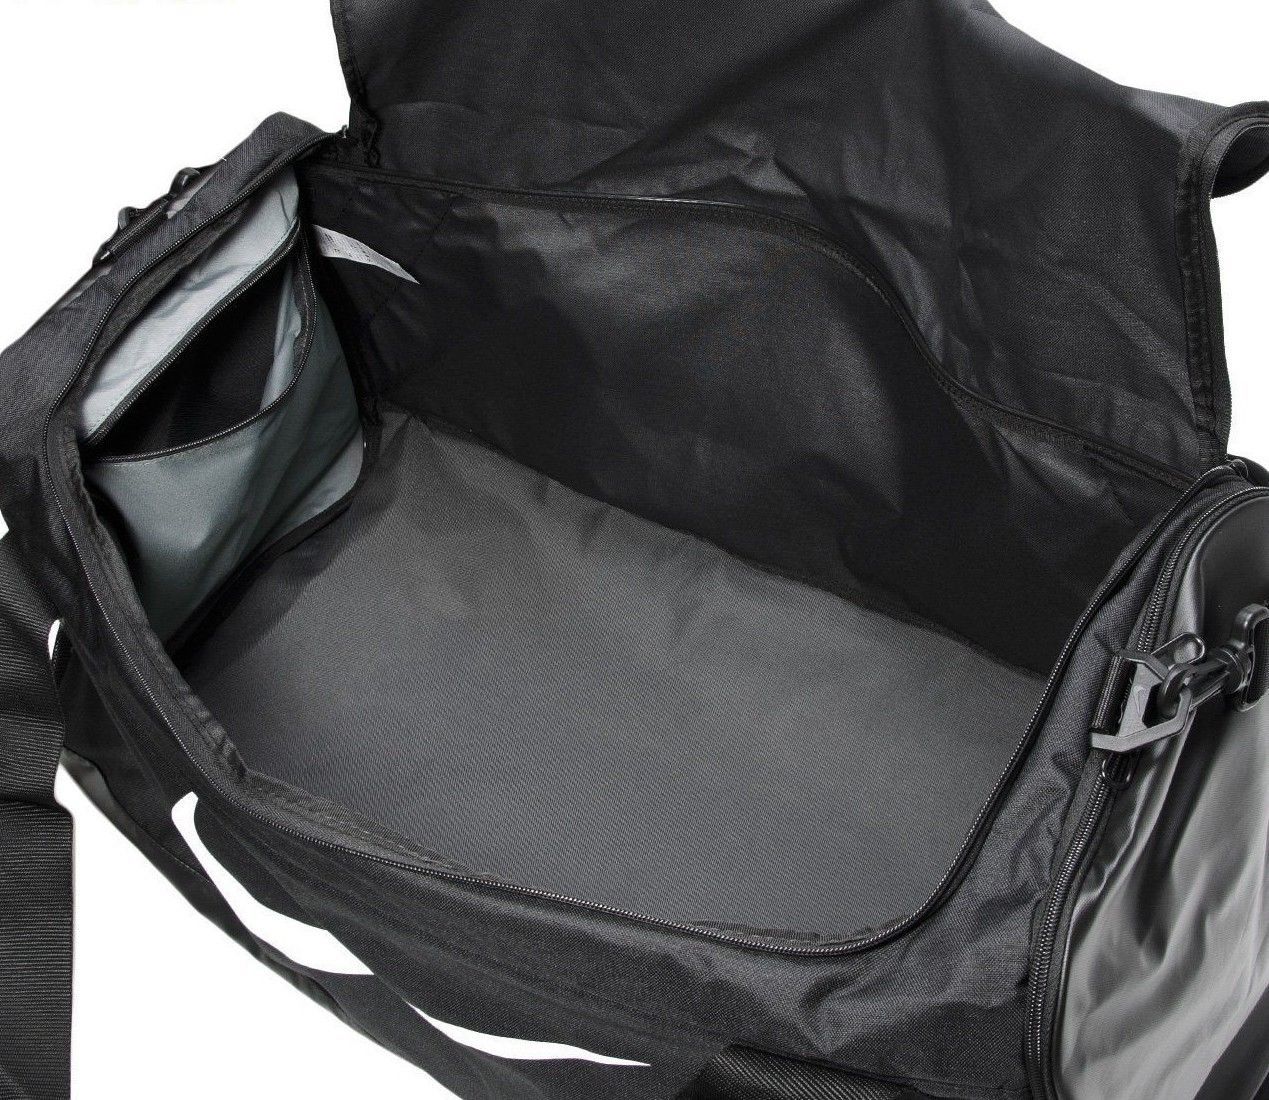 Nike Brasilia Extra Large Duffel Bag, BA5352 010 Black/Black/White 6165 CU IN - Bags & Backpacks